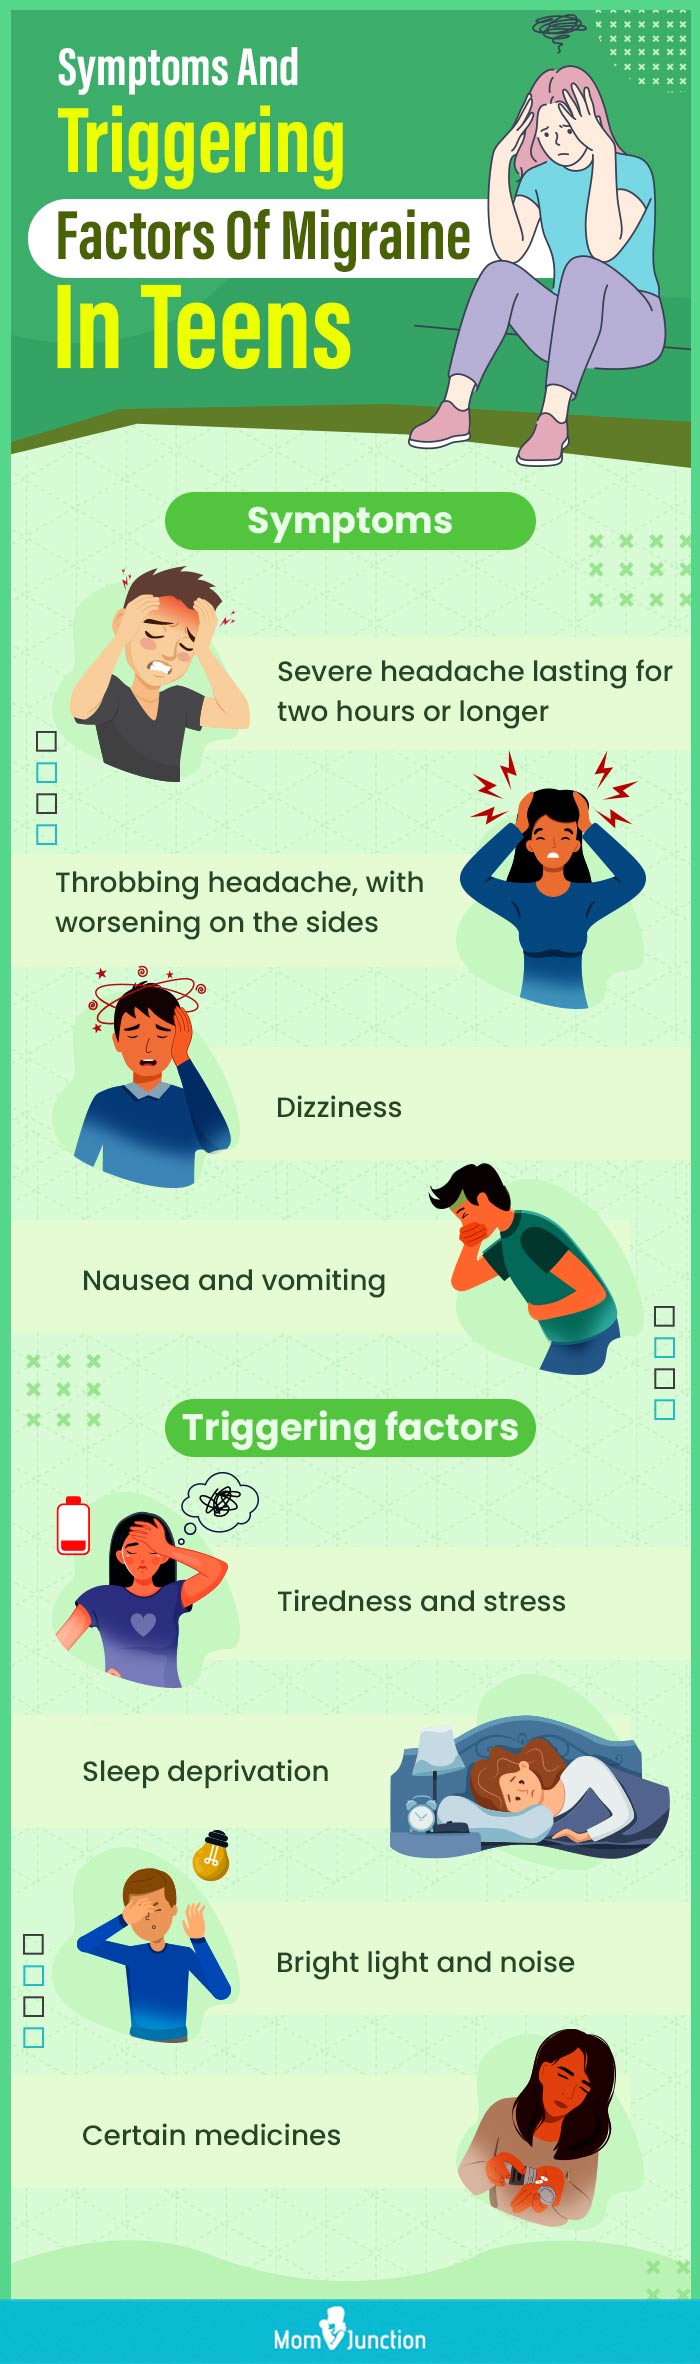 symptoms and triggering factors of migraine in teens (infographic)